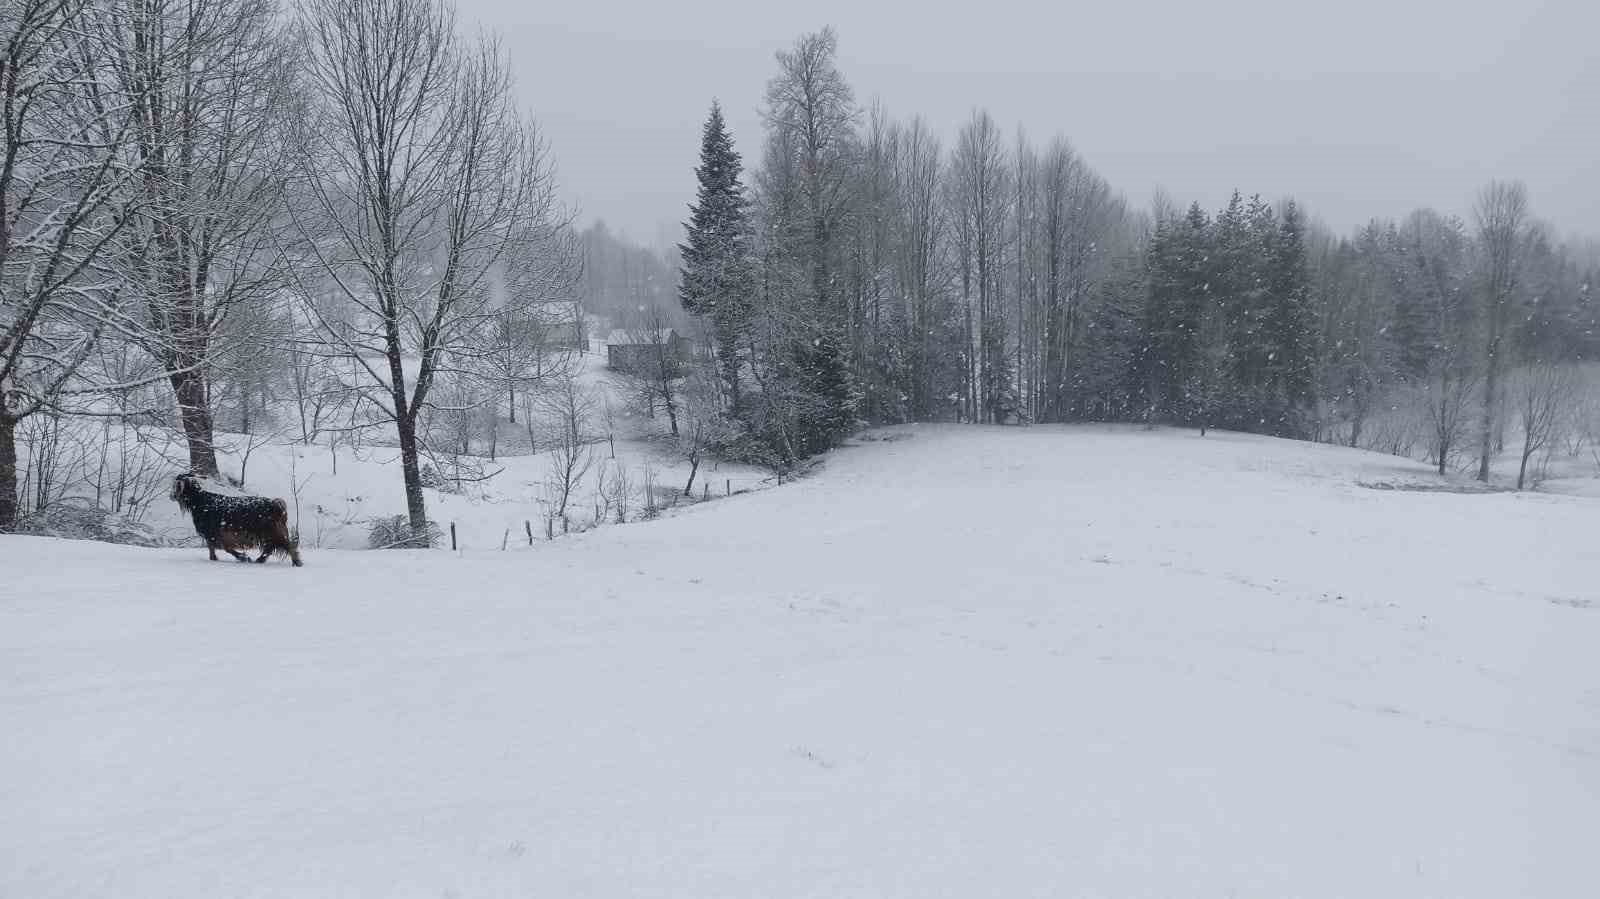 bahar ayinda sakaryanin yuksek kesimlerinde lapa lapa kar yagiyor 0 mrHBRV2Y